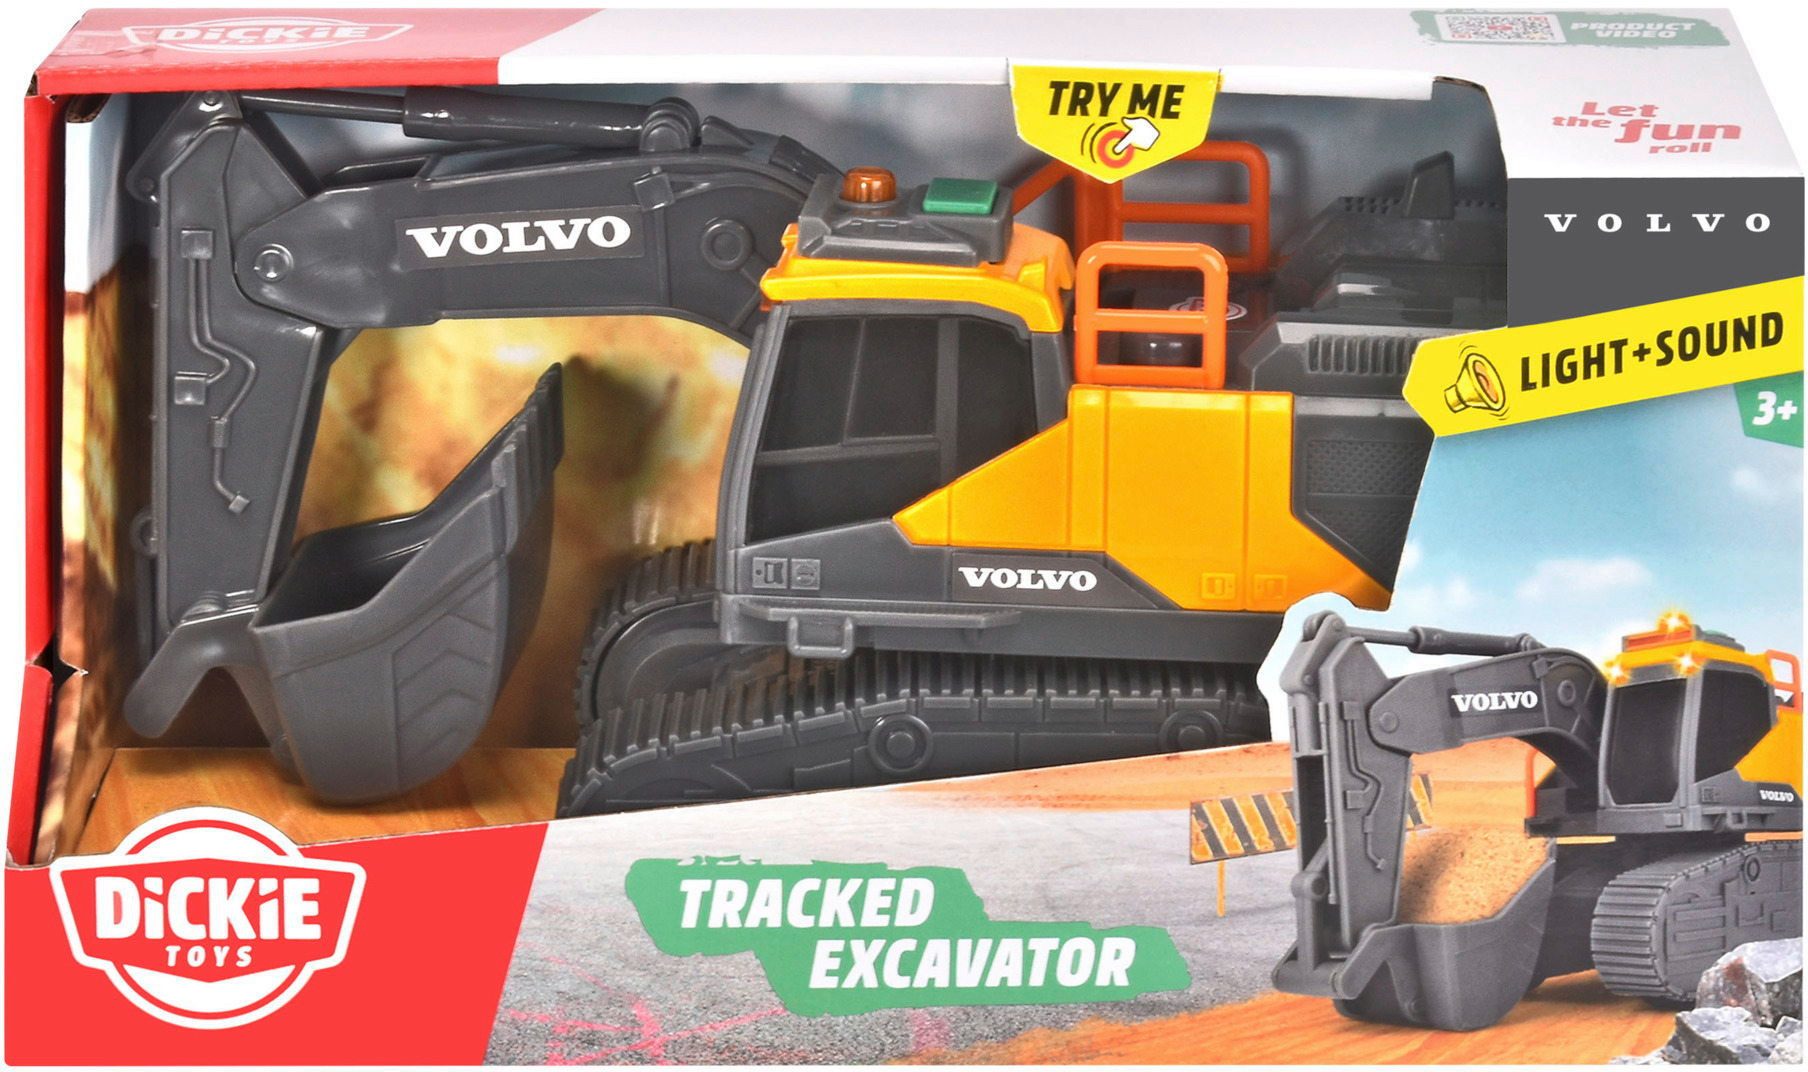 Dickie Toys Spielzeug-Bagger Dickie Spielfahrzeug Baustelle Bagger Go Real Volvo Tracked Excavator